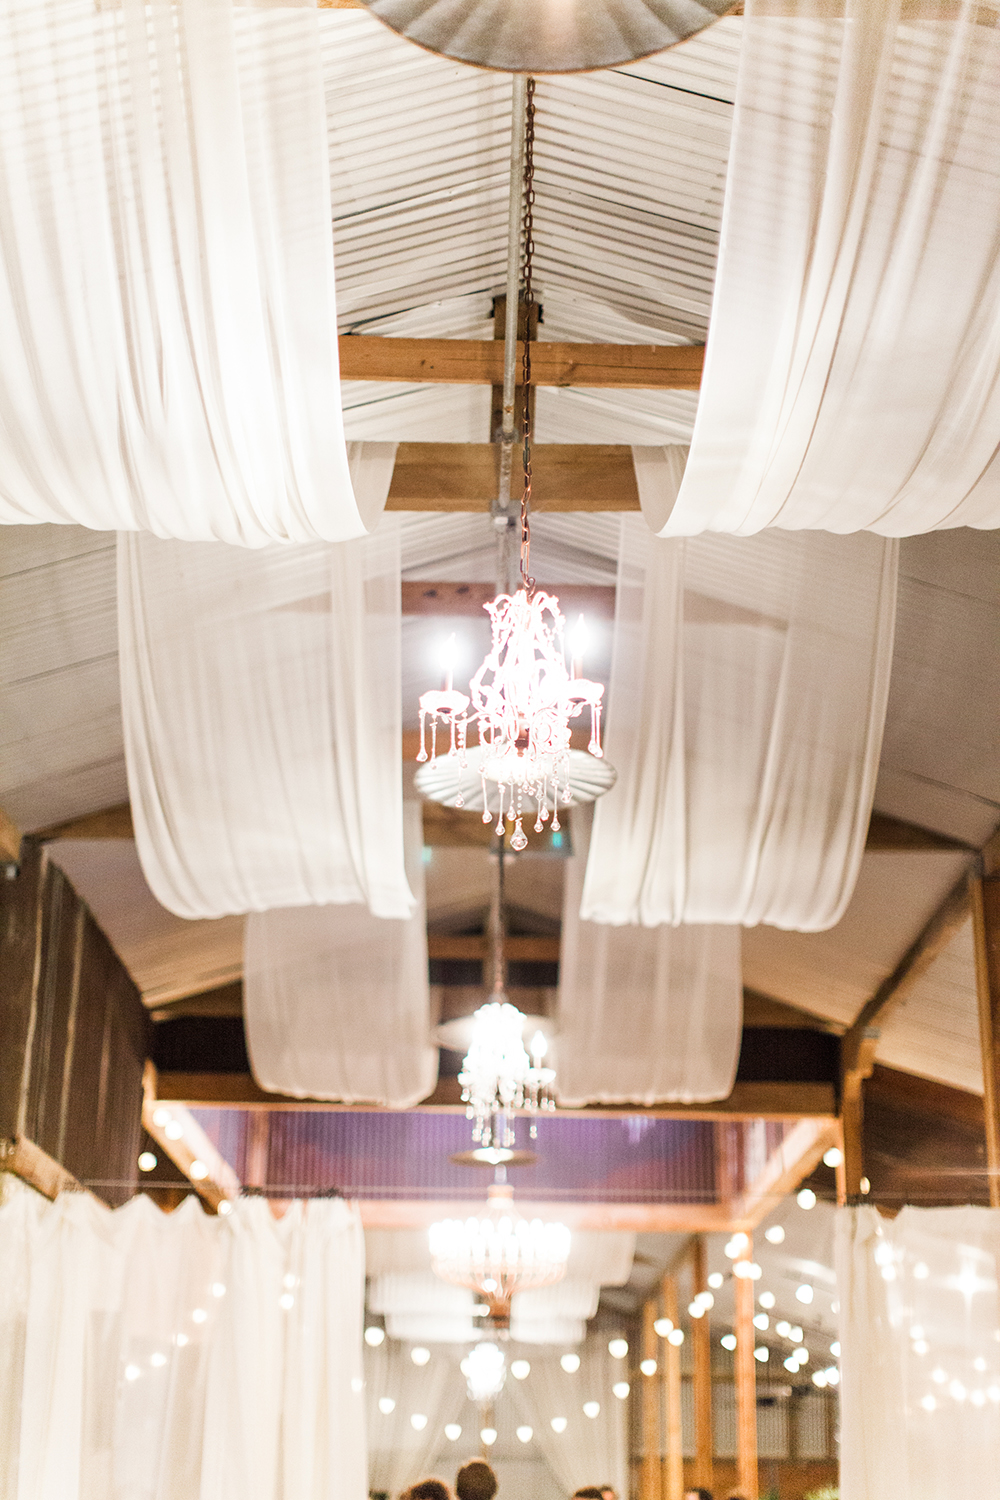 houston wedding venue - moffitt oaks - tented ceiling